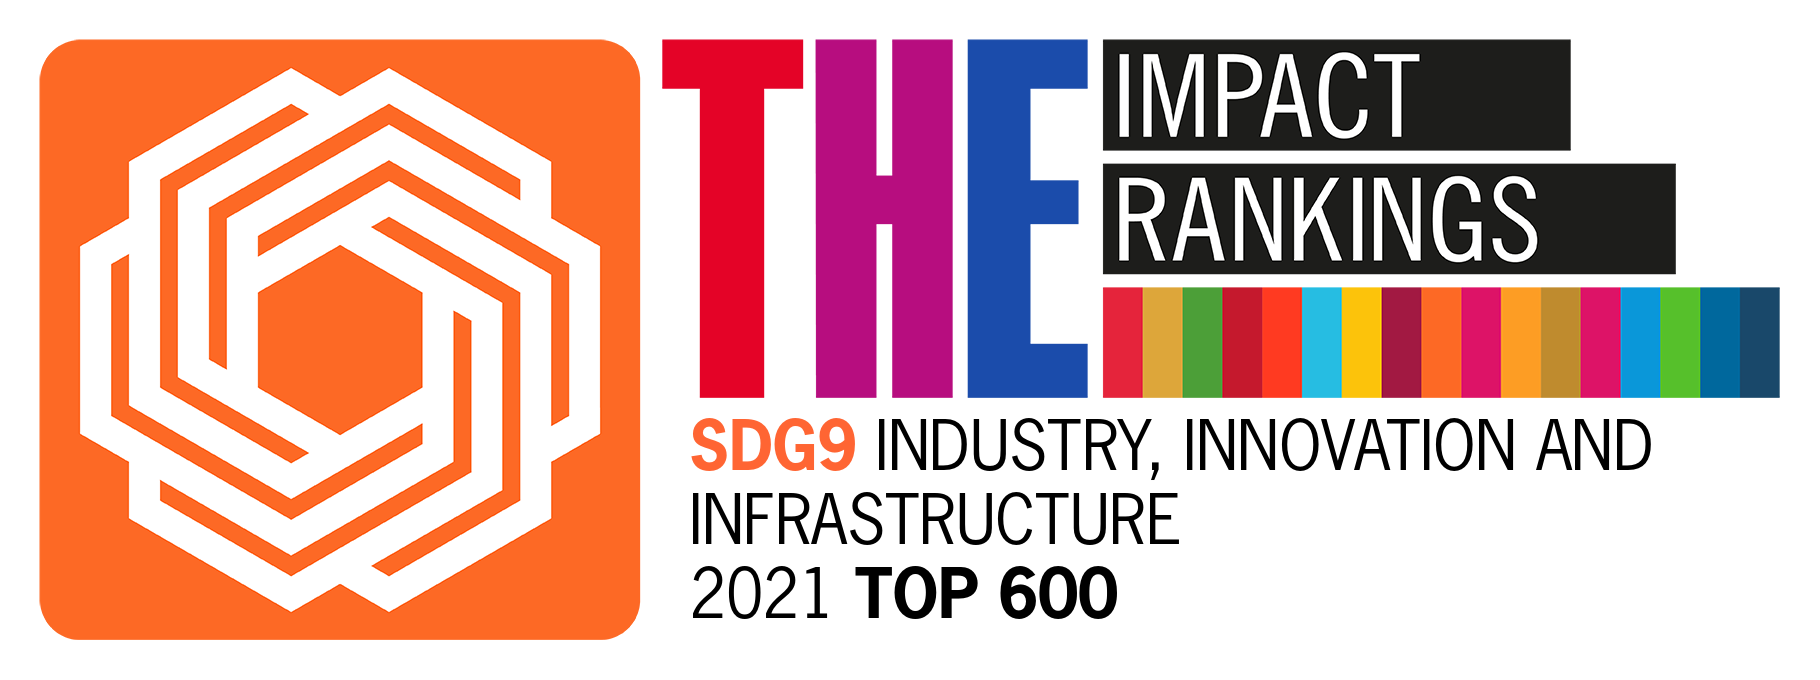 Impact_Ranking-2021_SDG9